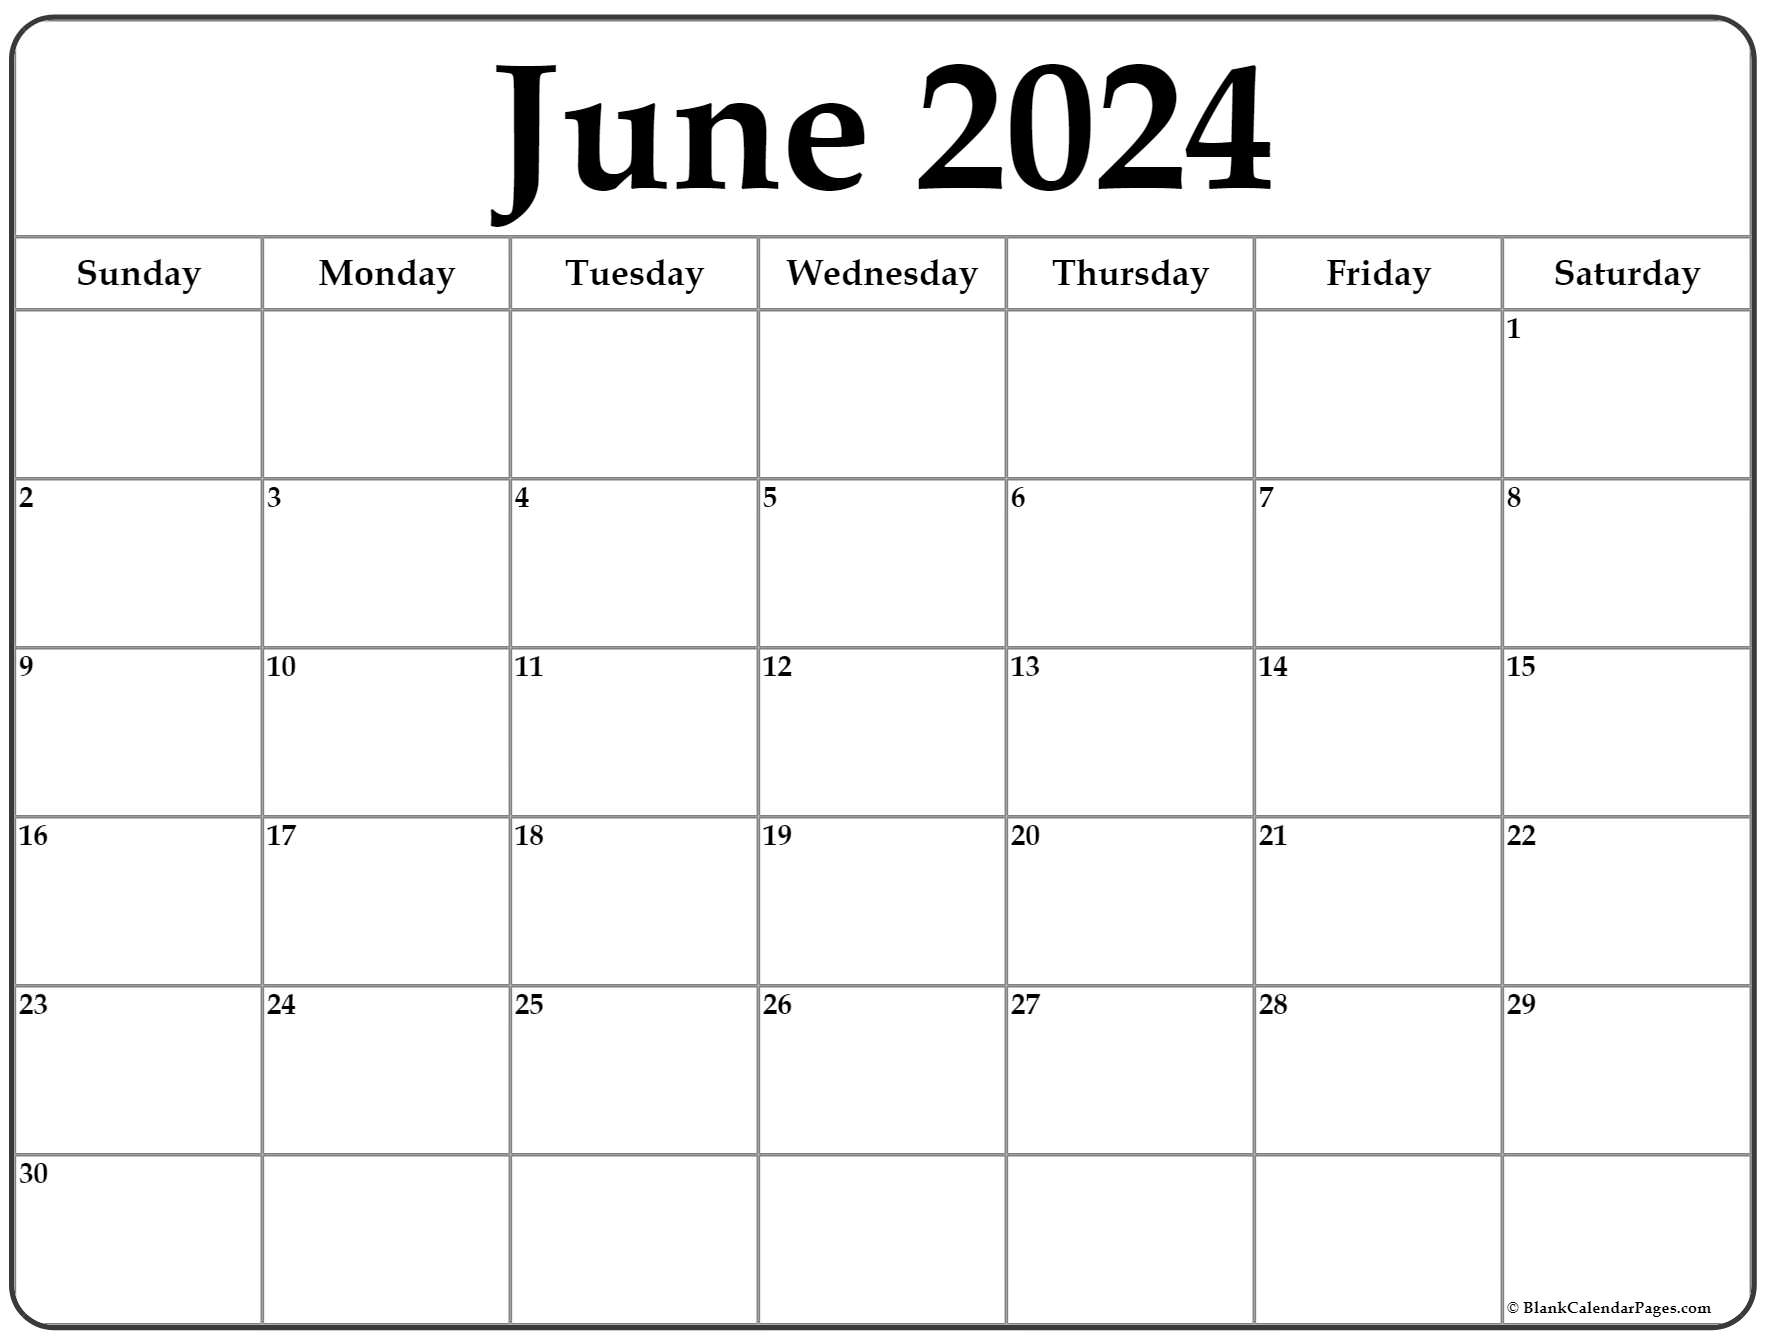 june-2024-calendar-free-printable-calendar